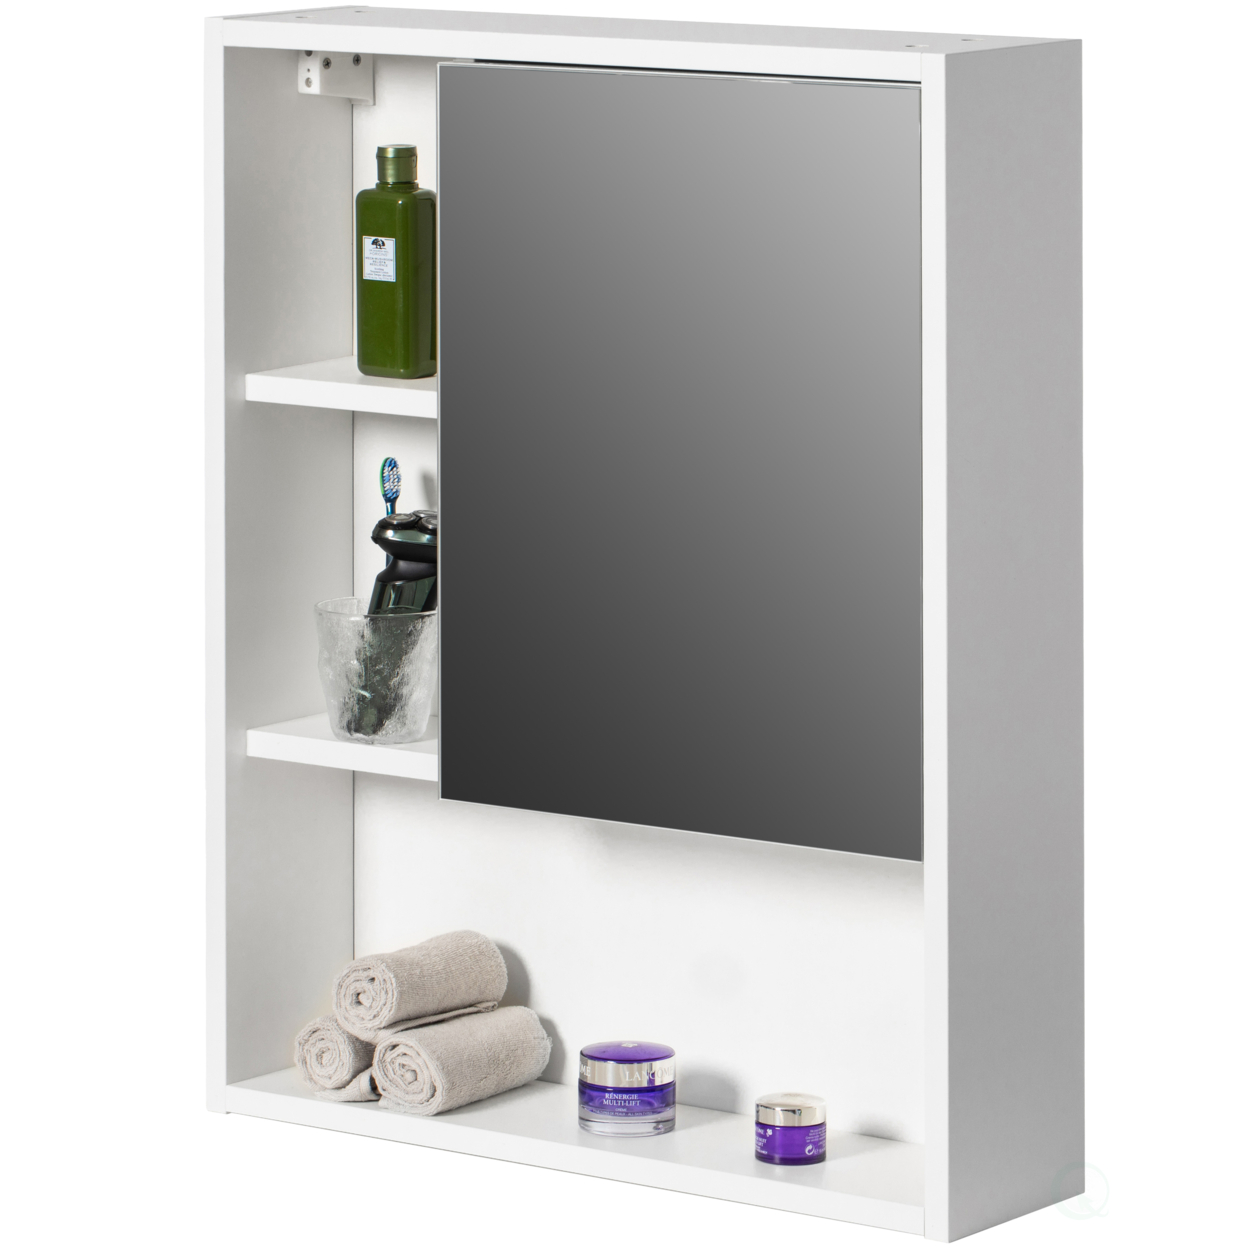 Wall Mount Bathroom Mirrored Storage Cabinet With Open Shelf 2 Adjustable Shelves Medicine Organizer Storage Furniture - White